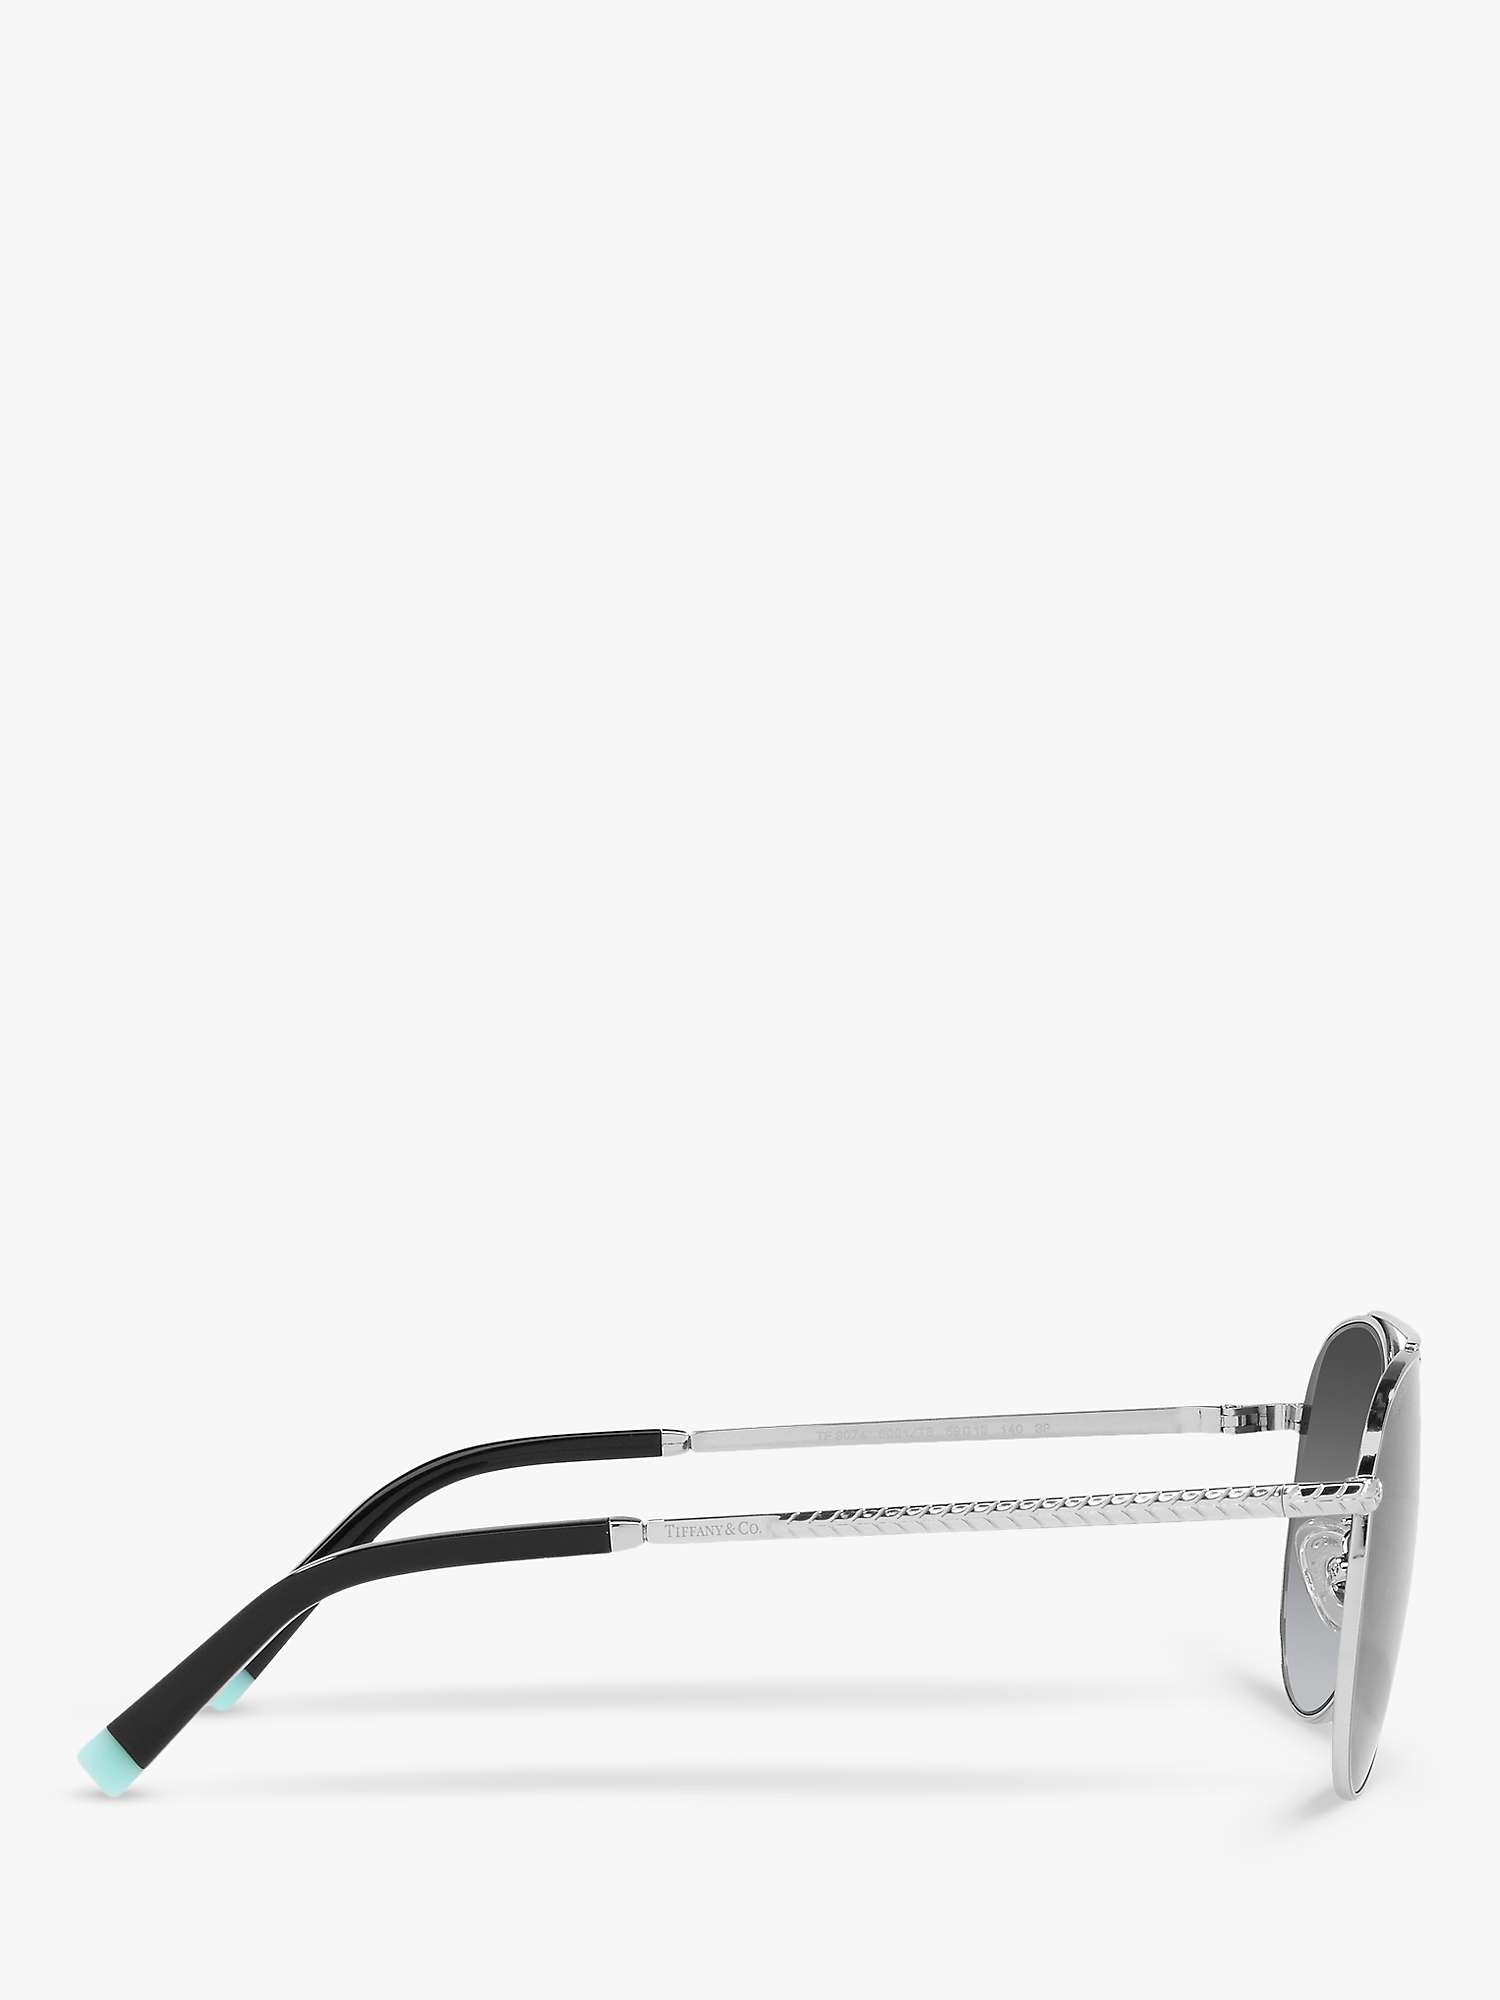 Buy Tiffany & Co TF3074 Women's Polarised Aviator Sunglasses, Silver/Black Online at johnlewis.com